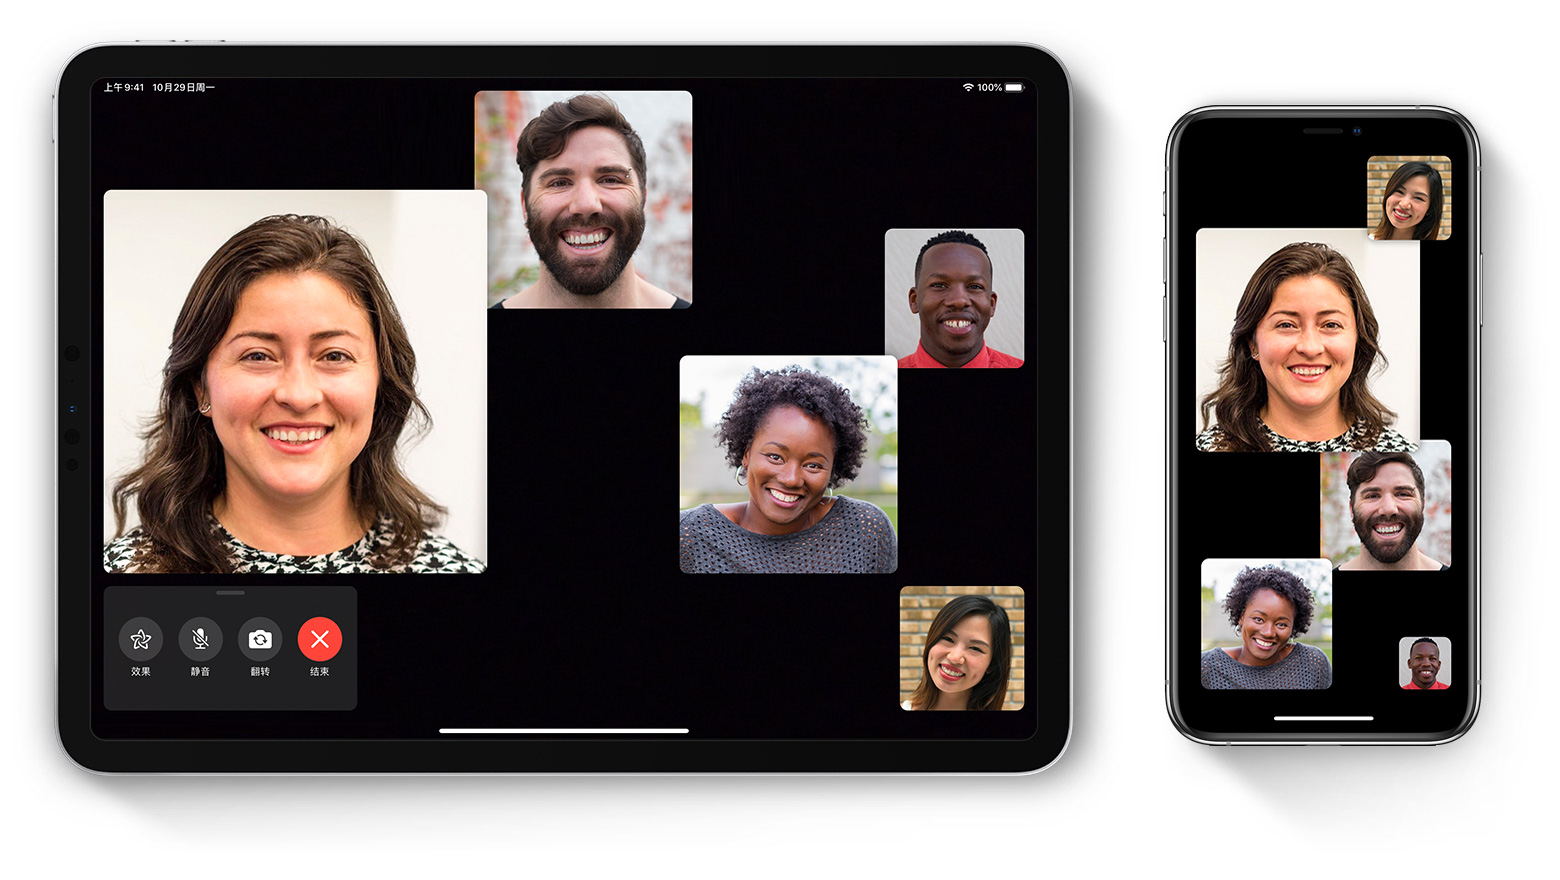 使用iphone Ipad 和ipod Touch 上的facetime 群聊功能 Apple 支持